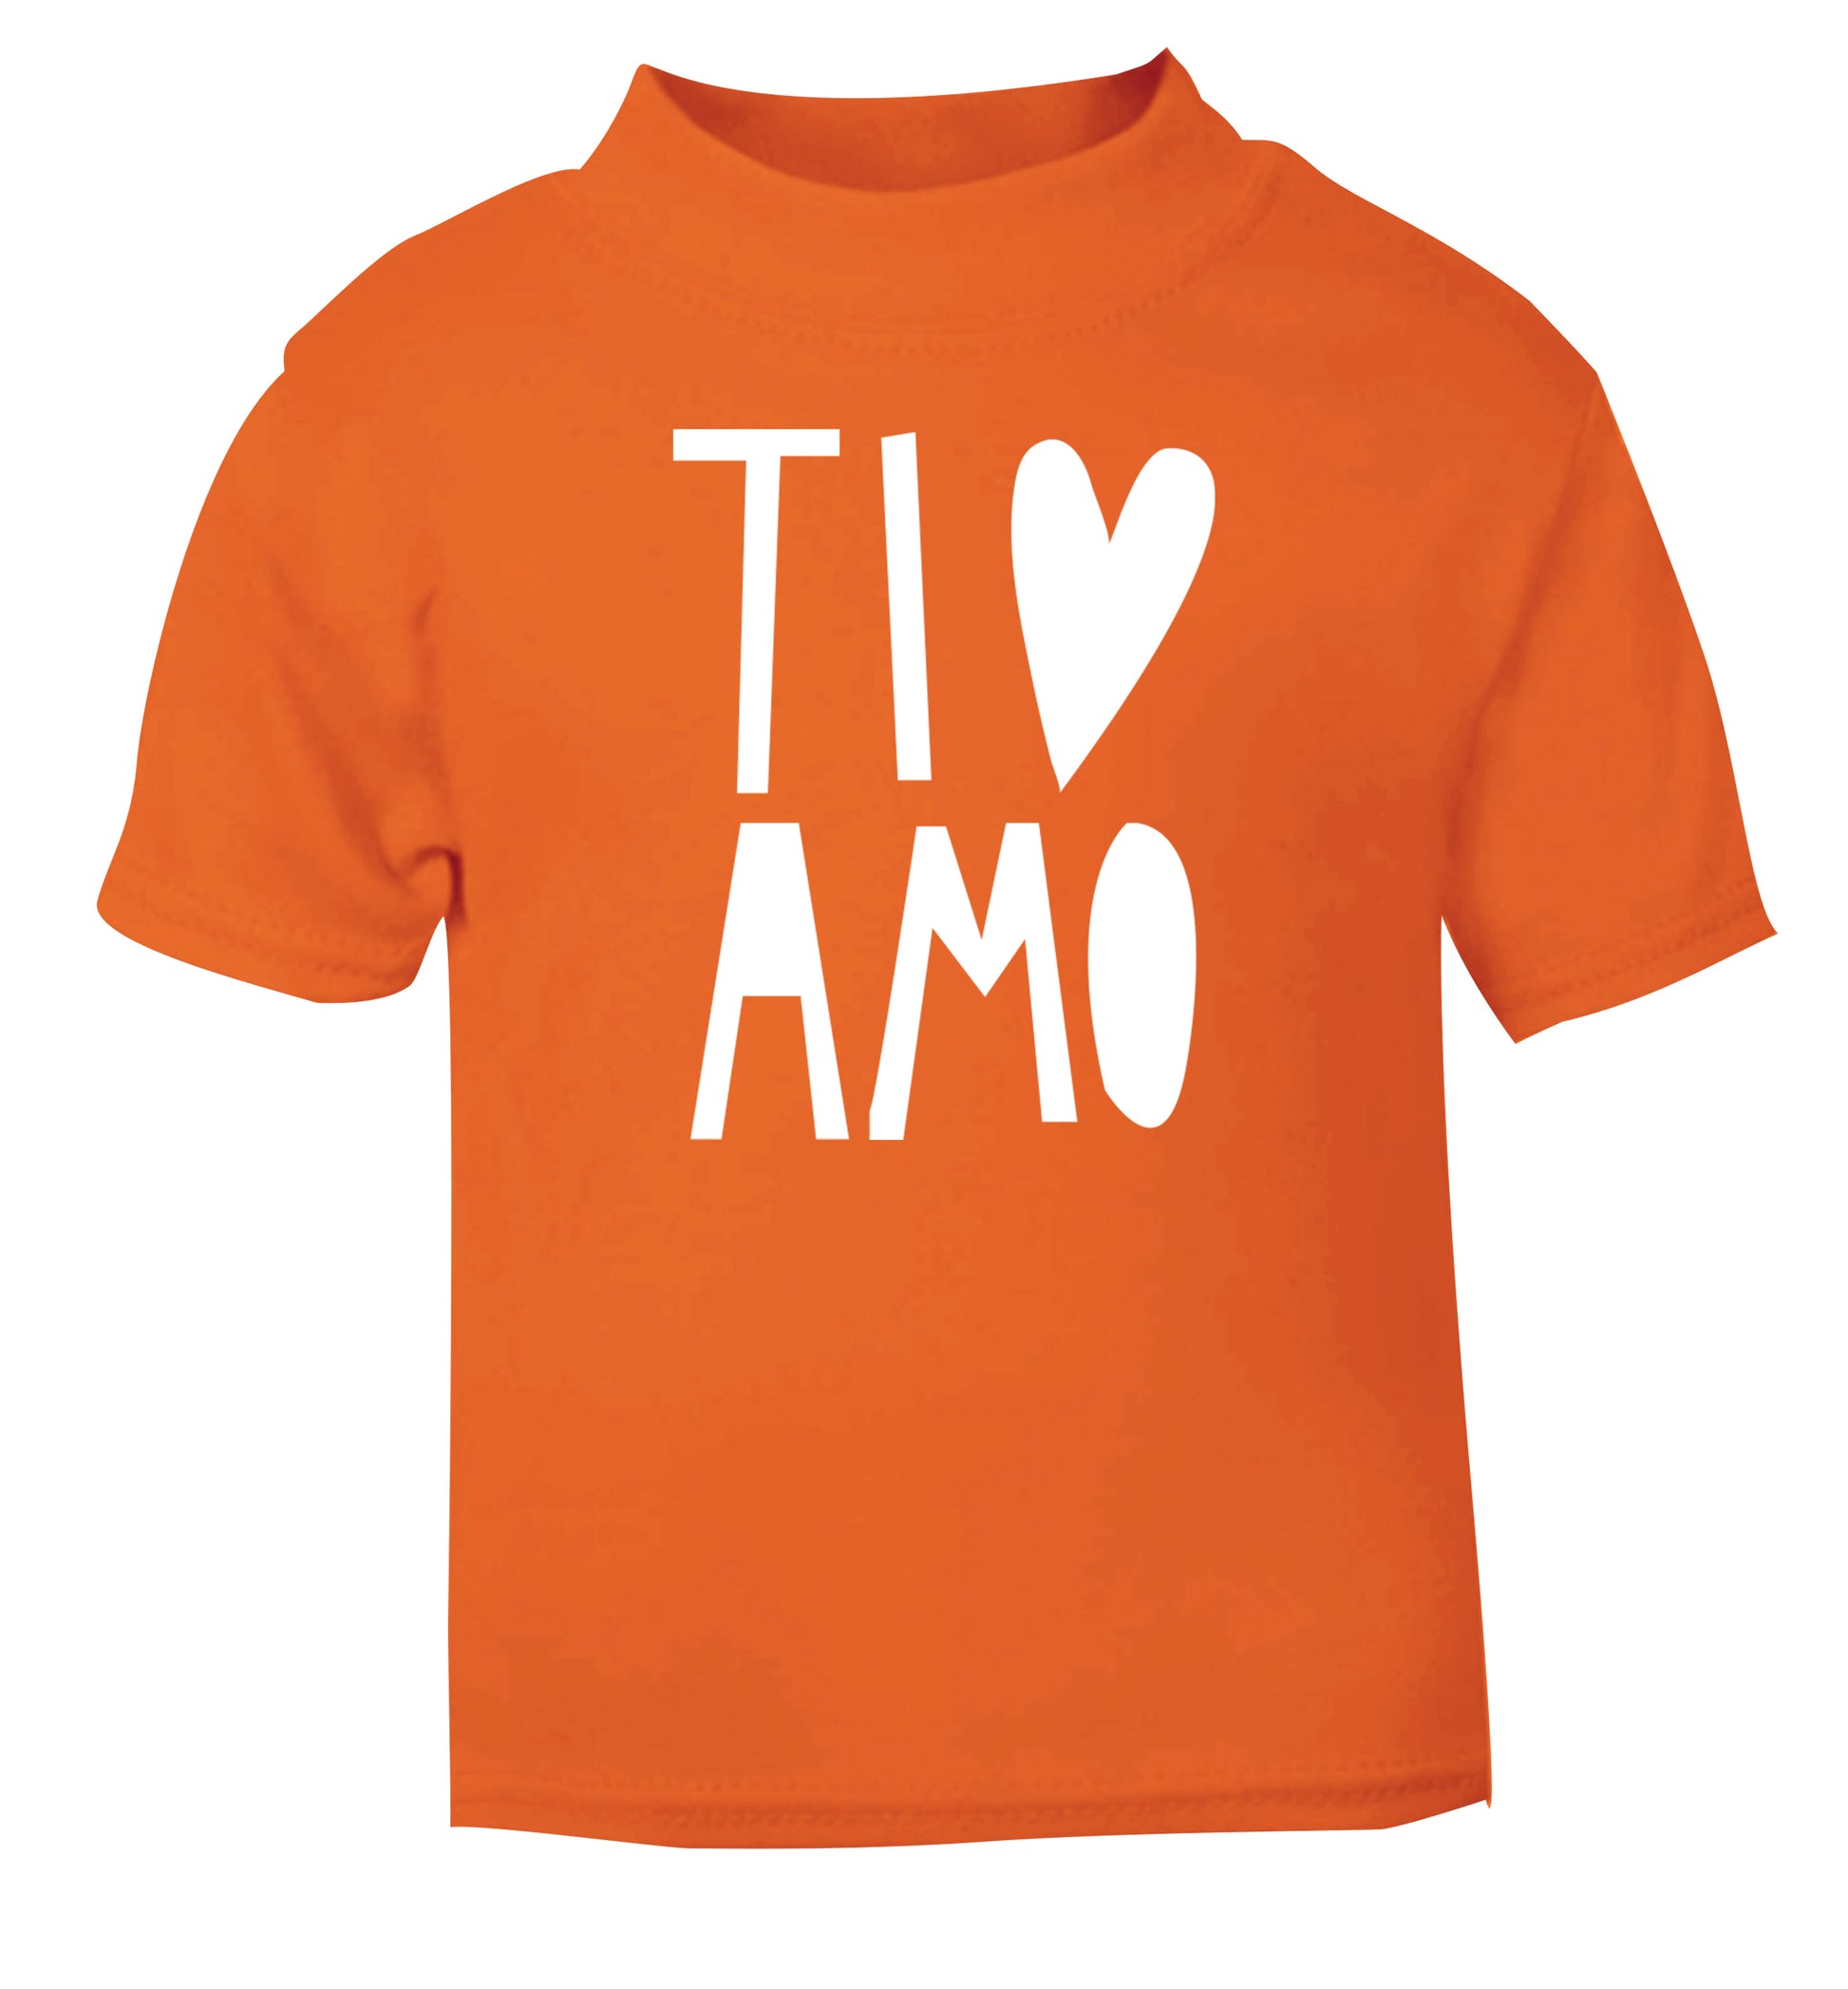 Ti amo - I love you orange Baby Toddler Tshirt 2 Years